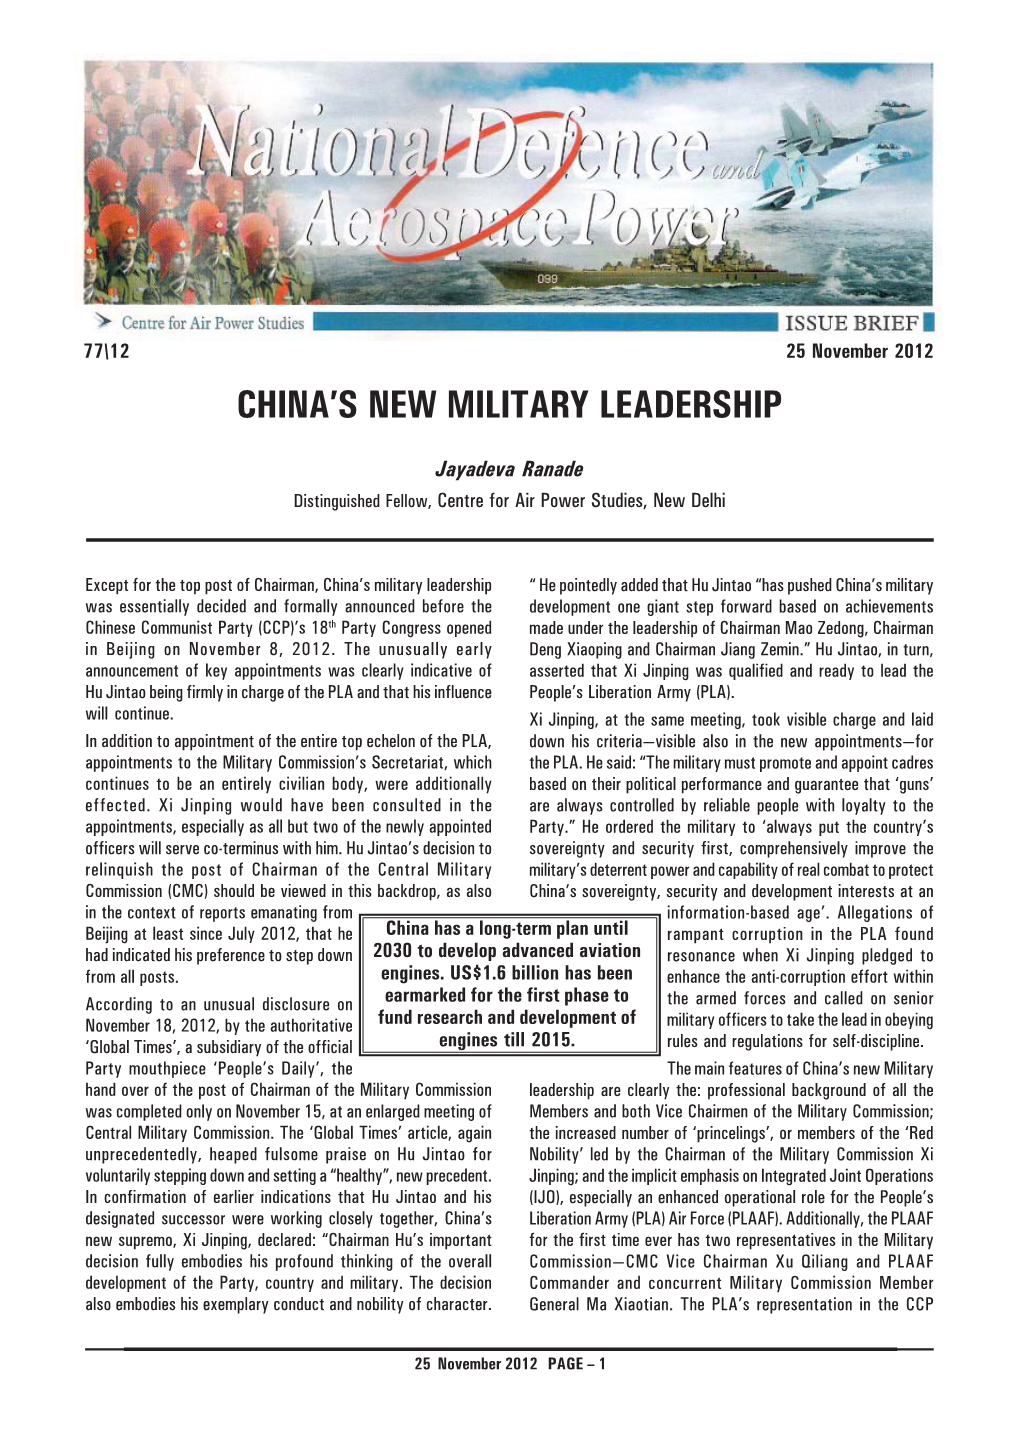 China's New Military Leadership